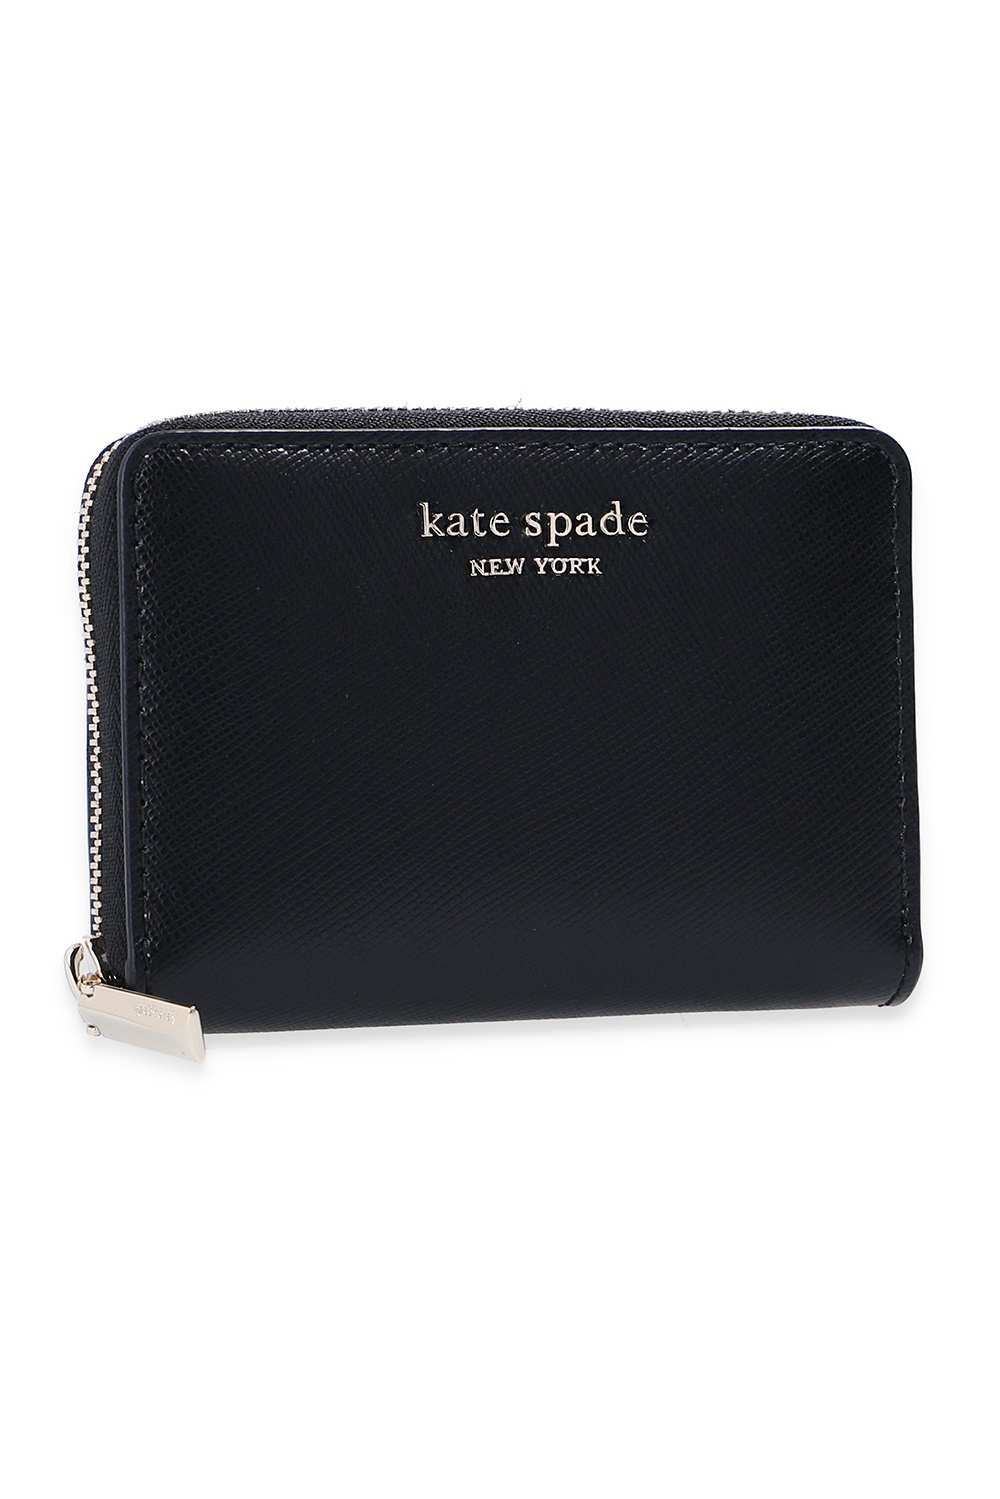 Kate Spade Scarves / shawls